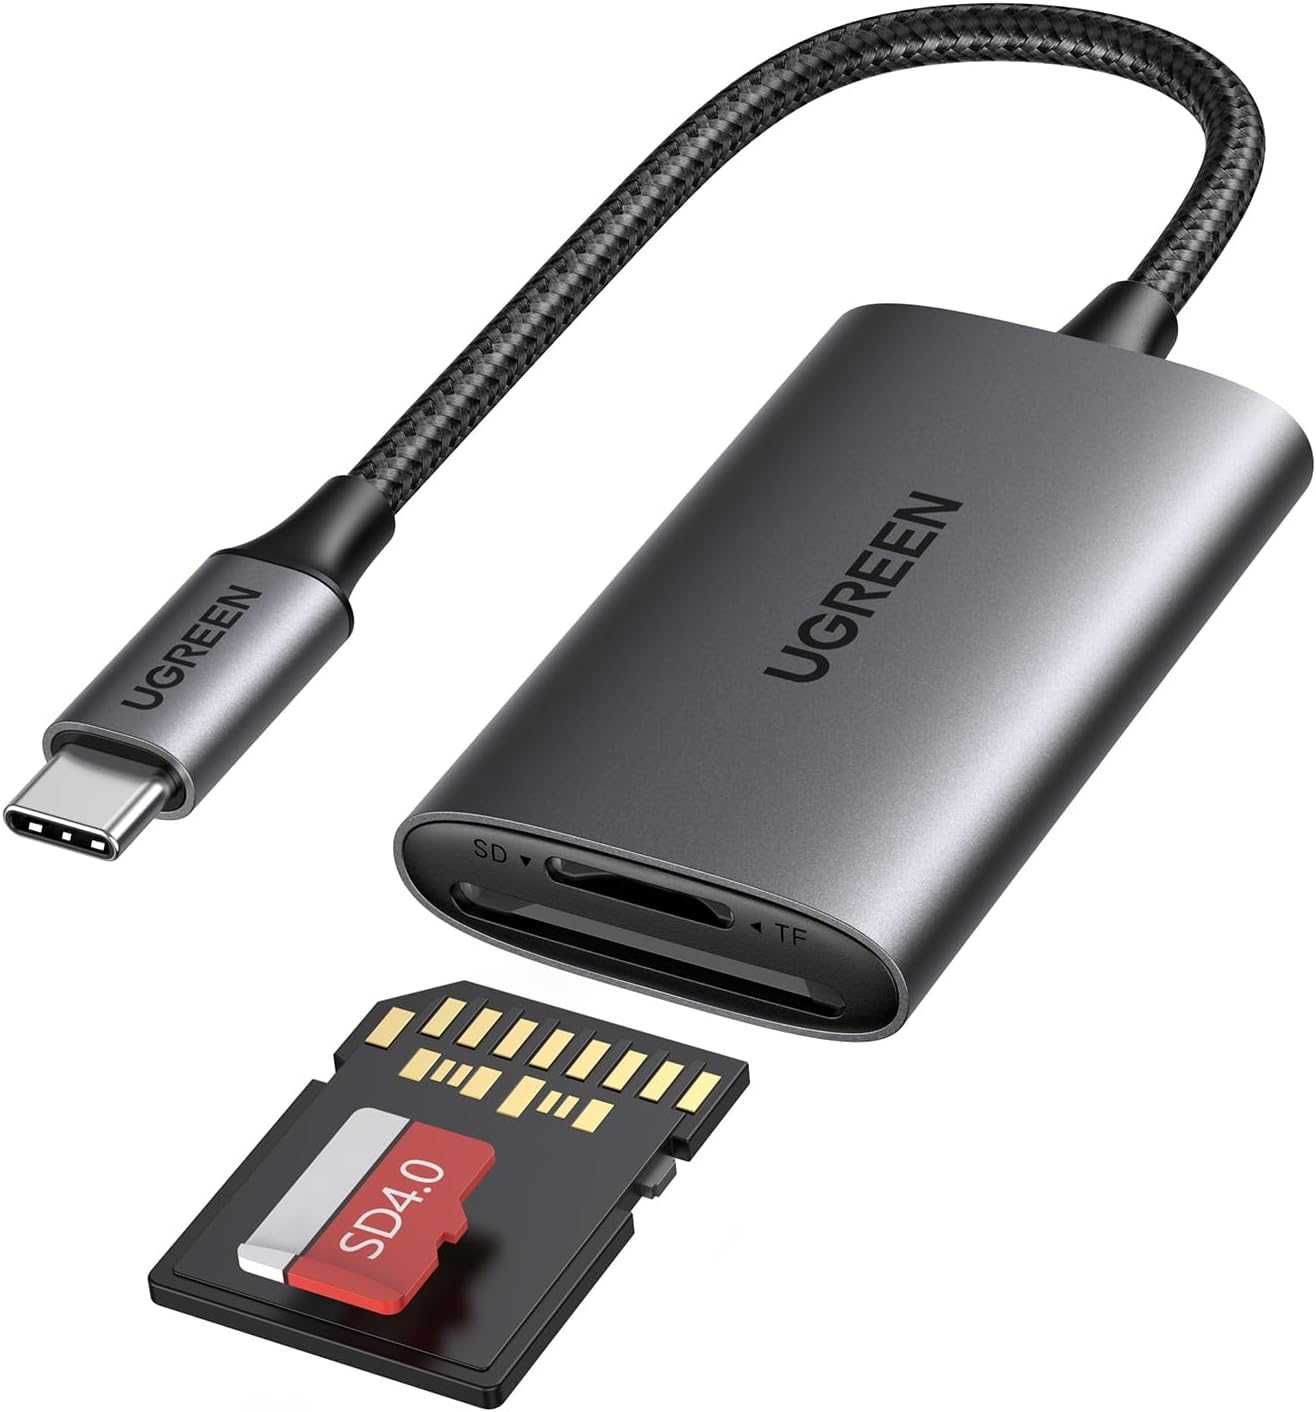 UGREEN 15251 USB C Czytnik kart SD 4.0, 2 in 1 Adapter Micro SD OTG